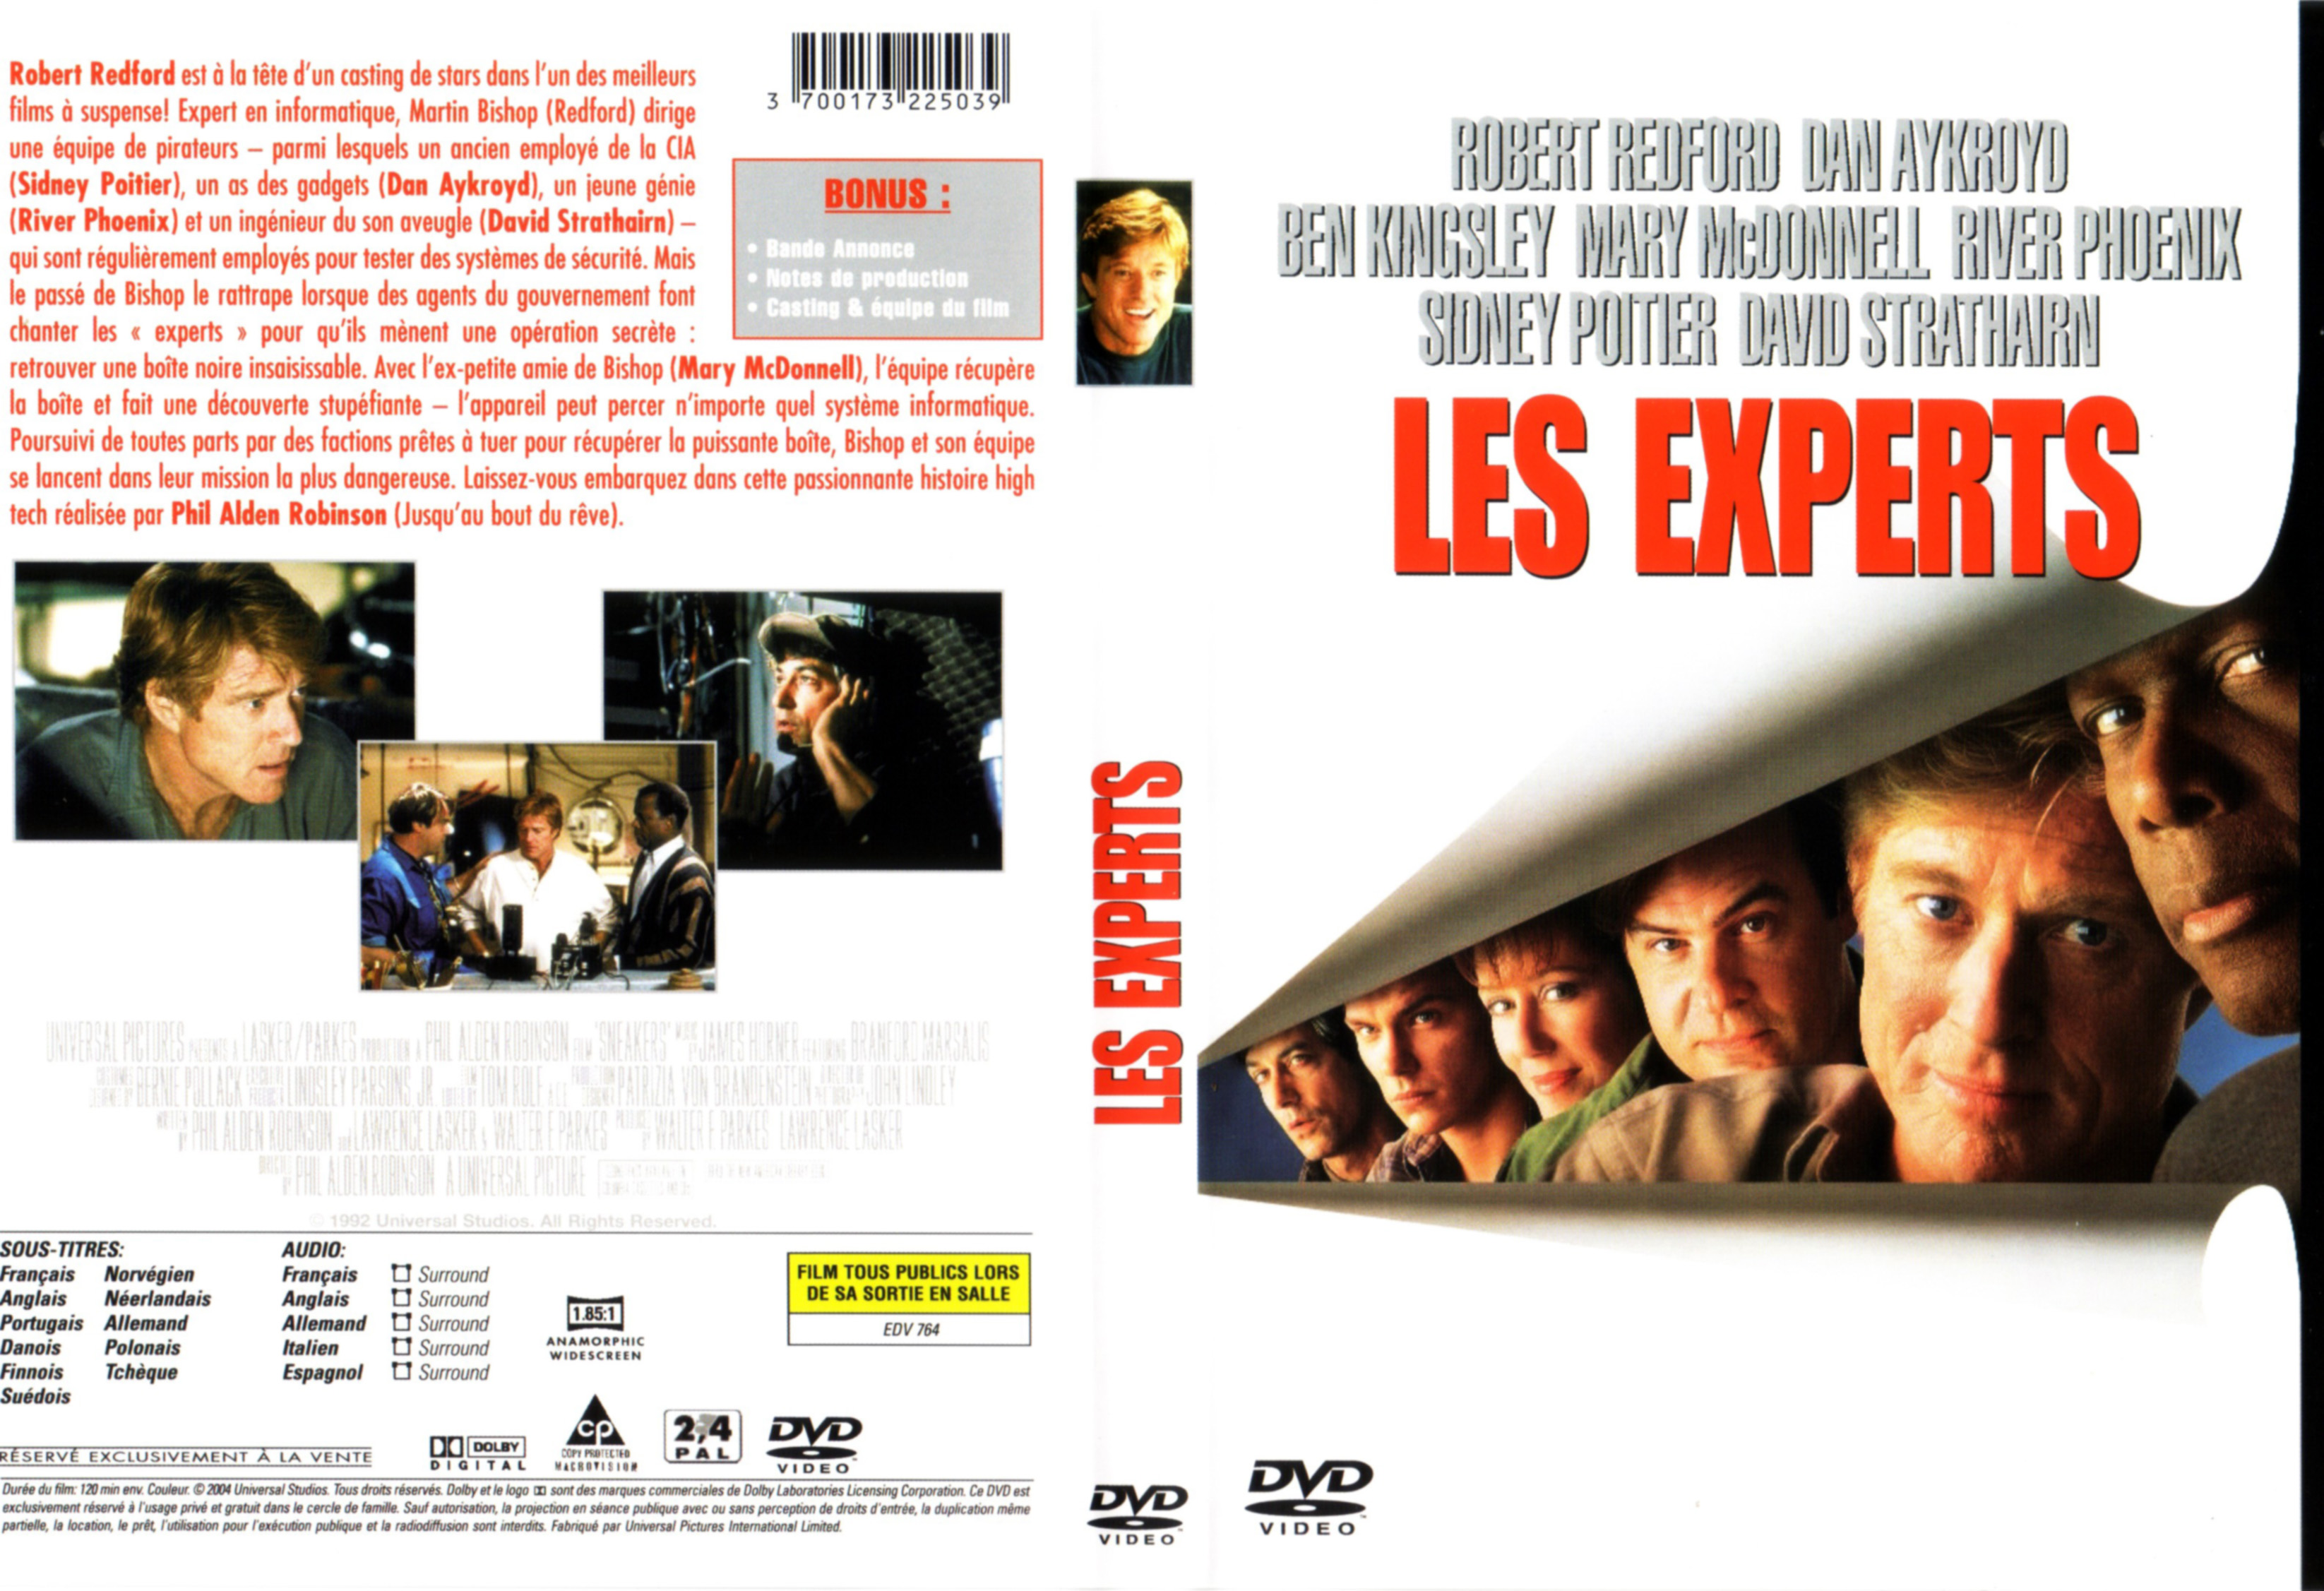 Jaquette DVD Les experts v2